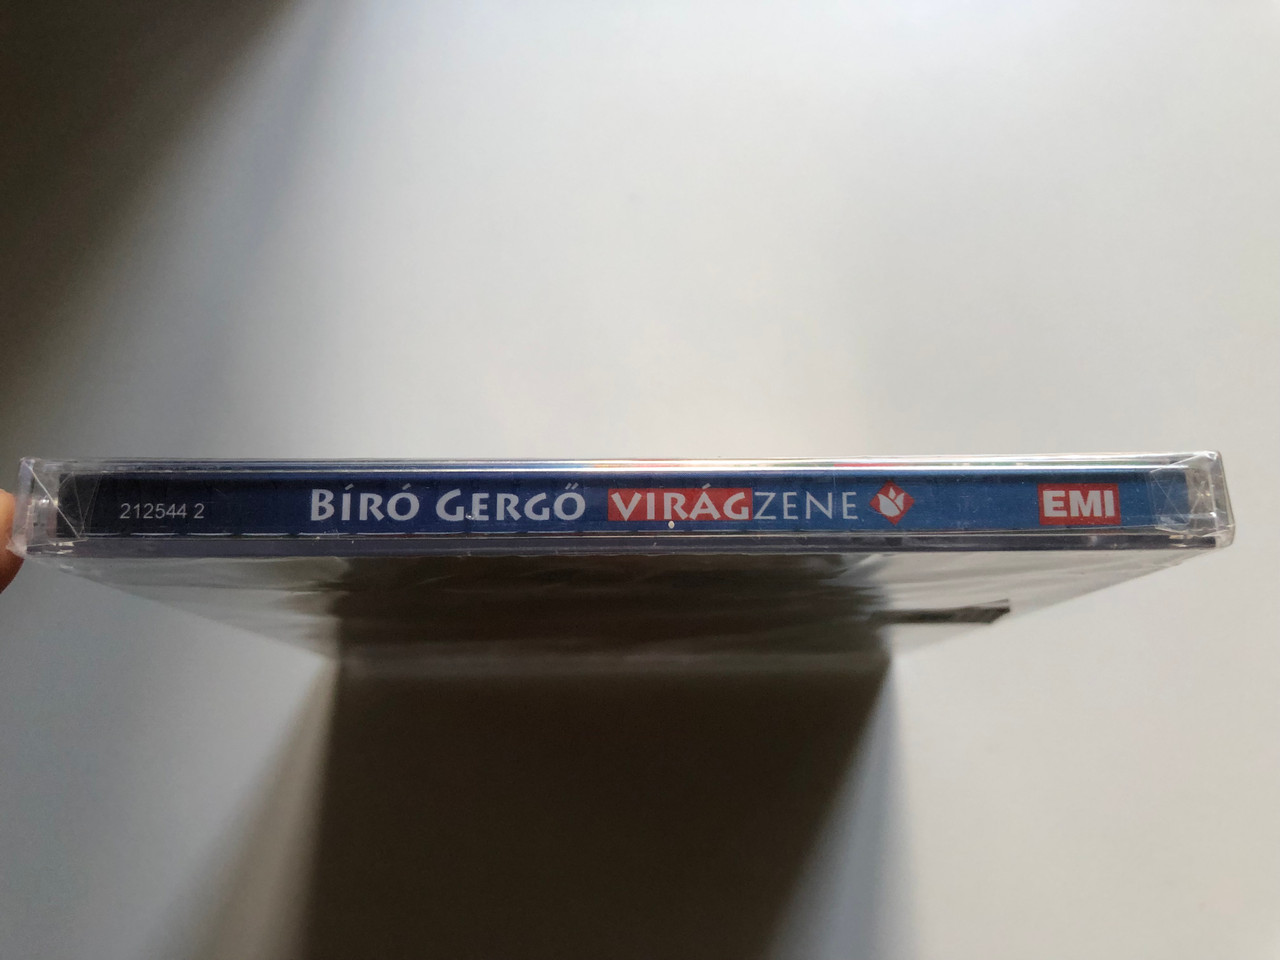 Bíró Gergő – Virágzene / Nagy magyar nepdalgyujtemeny / EMI Audio CD 2008 /  212544 2 - bibleinmylanguage